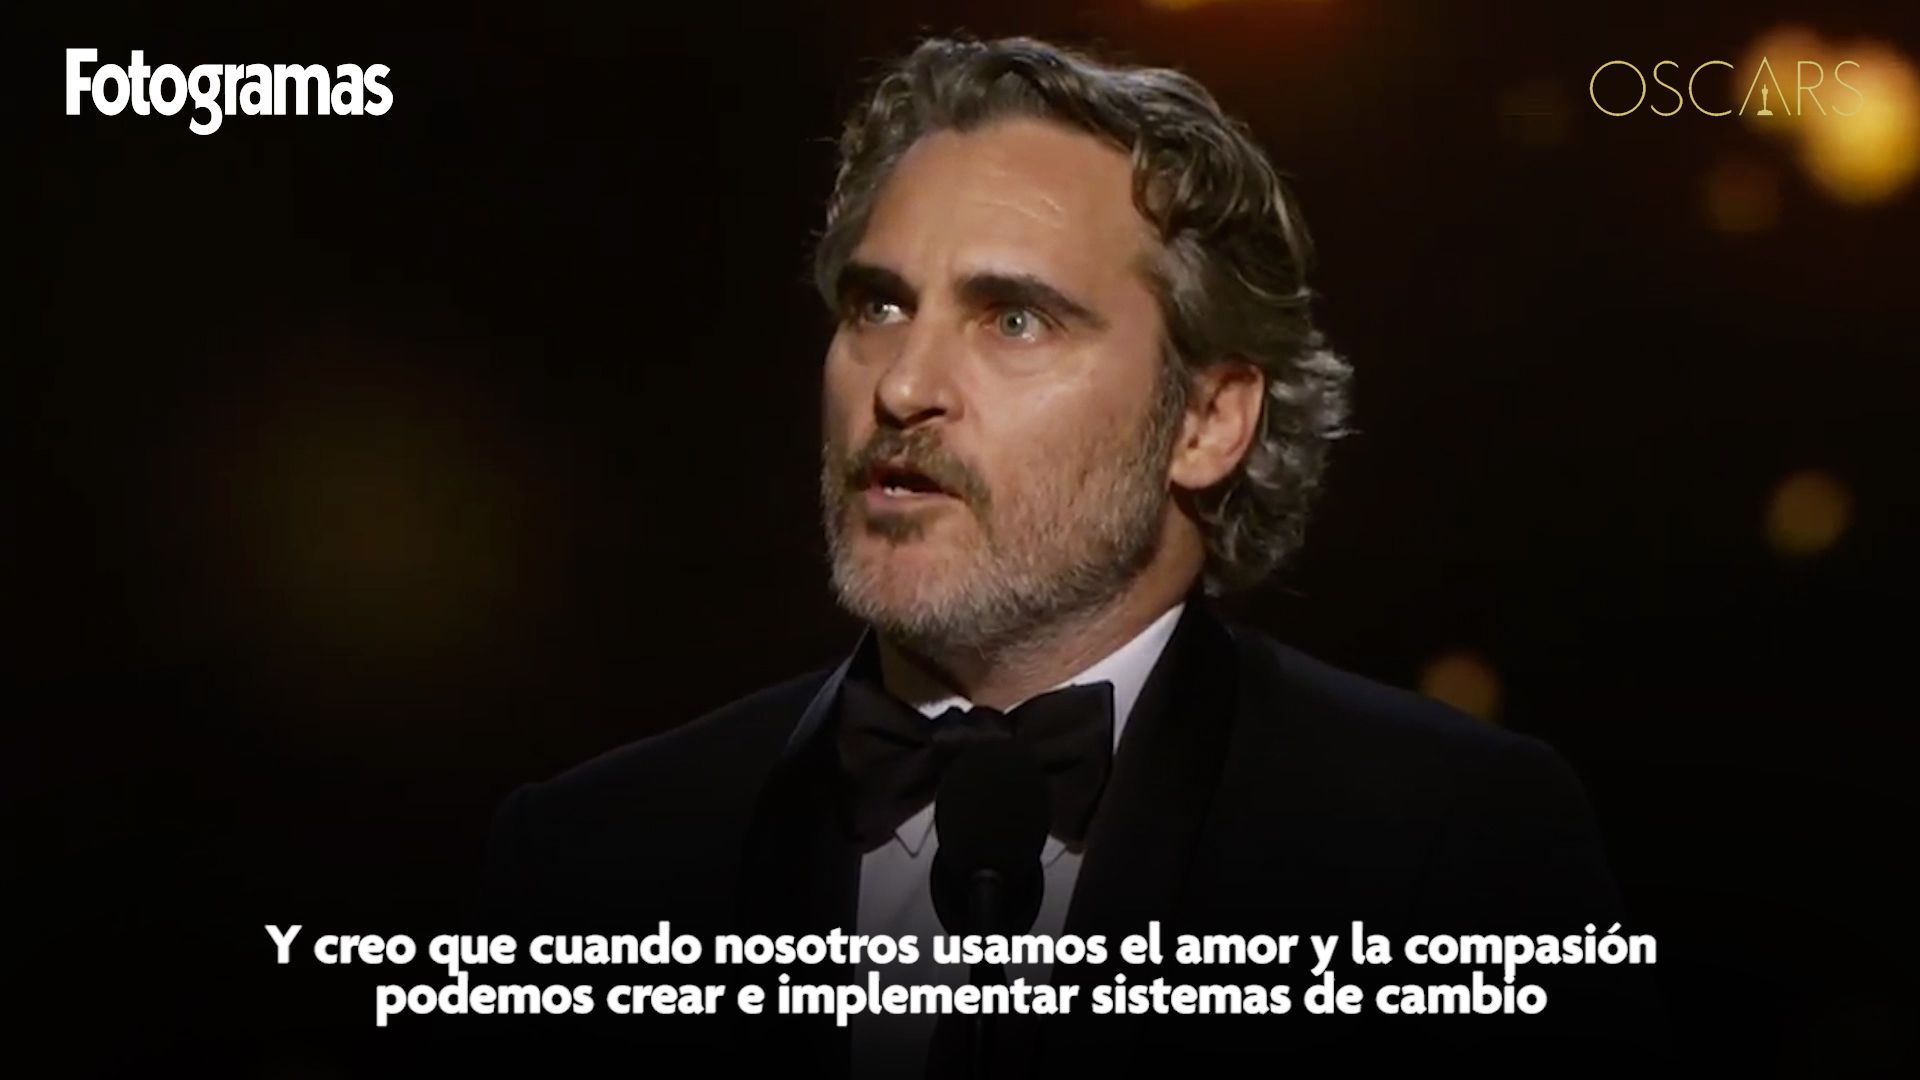 La frase del discurso de Joaquin Phoenix que ha hecho llorar a los Oscar  2020